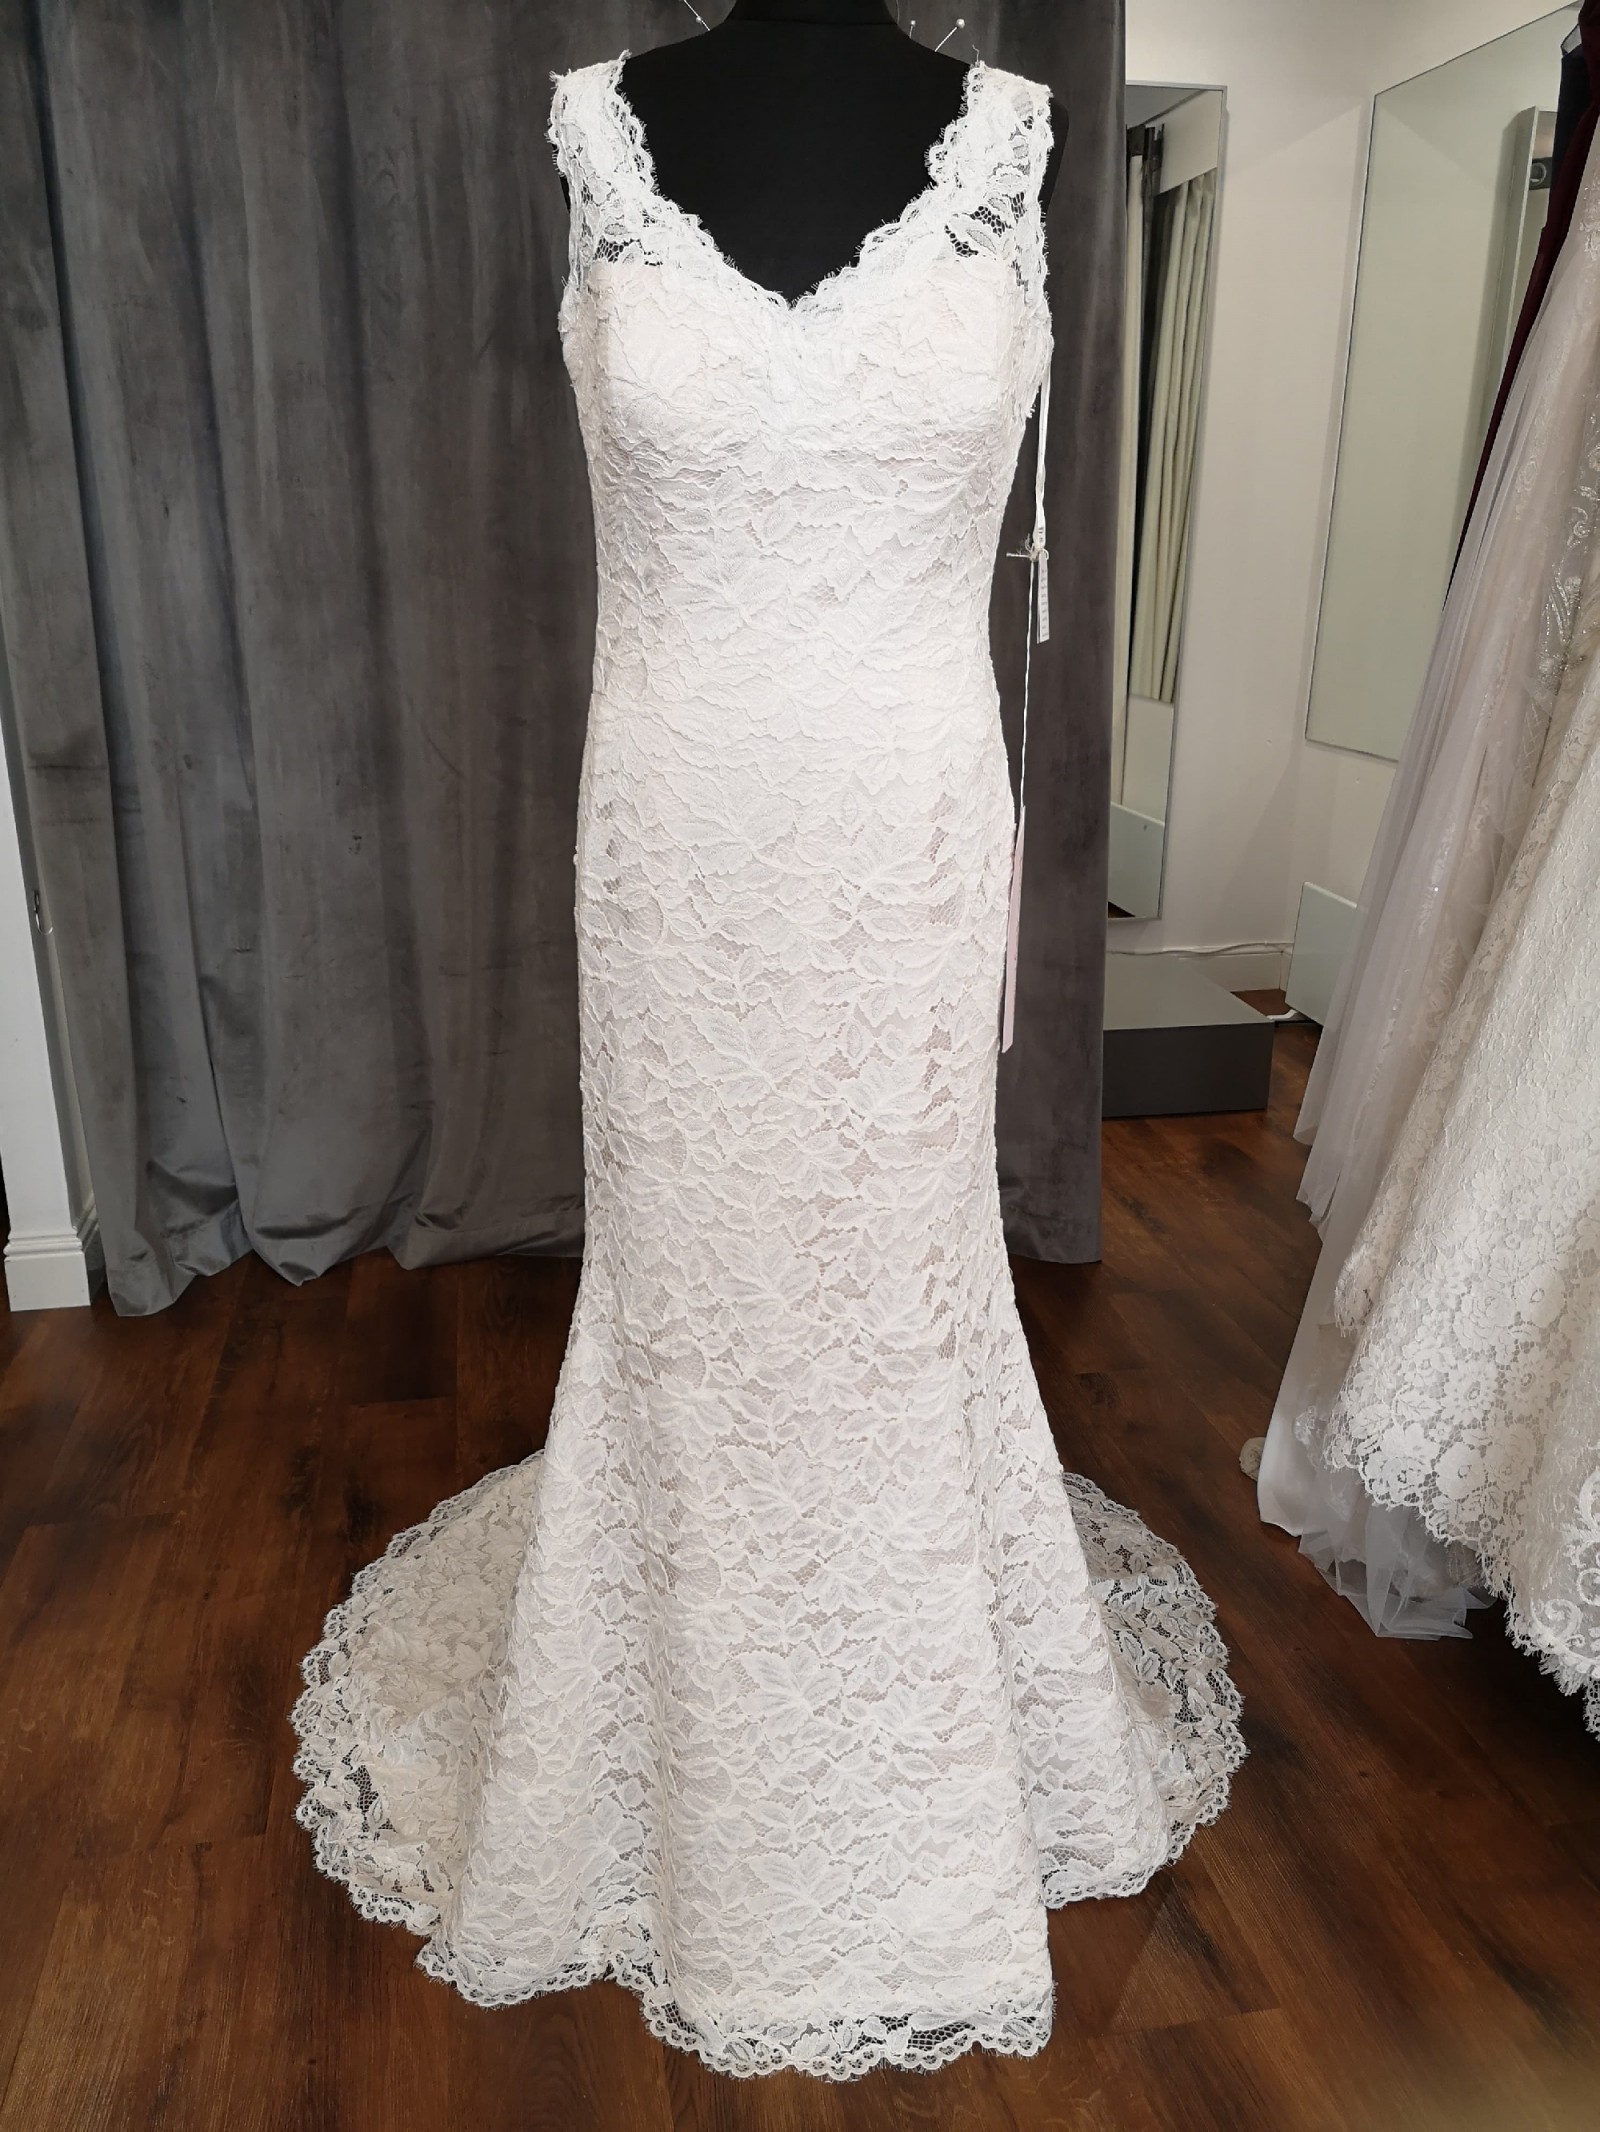 Millie May MG024 Sample Wedding Dress Save 82% - Stillwhite